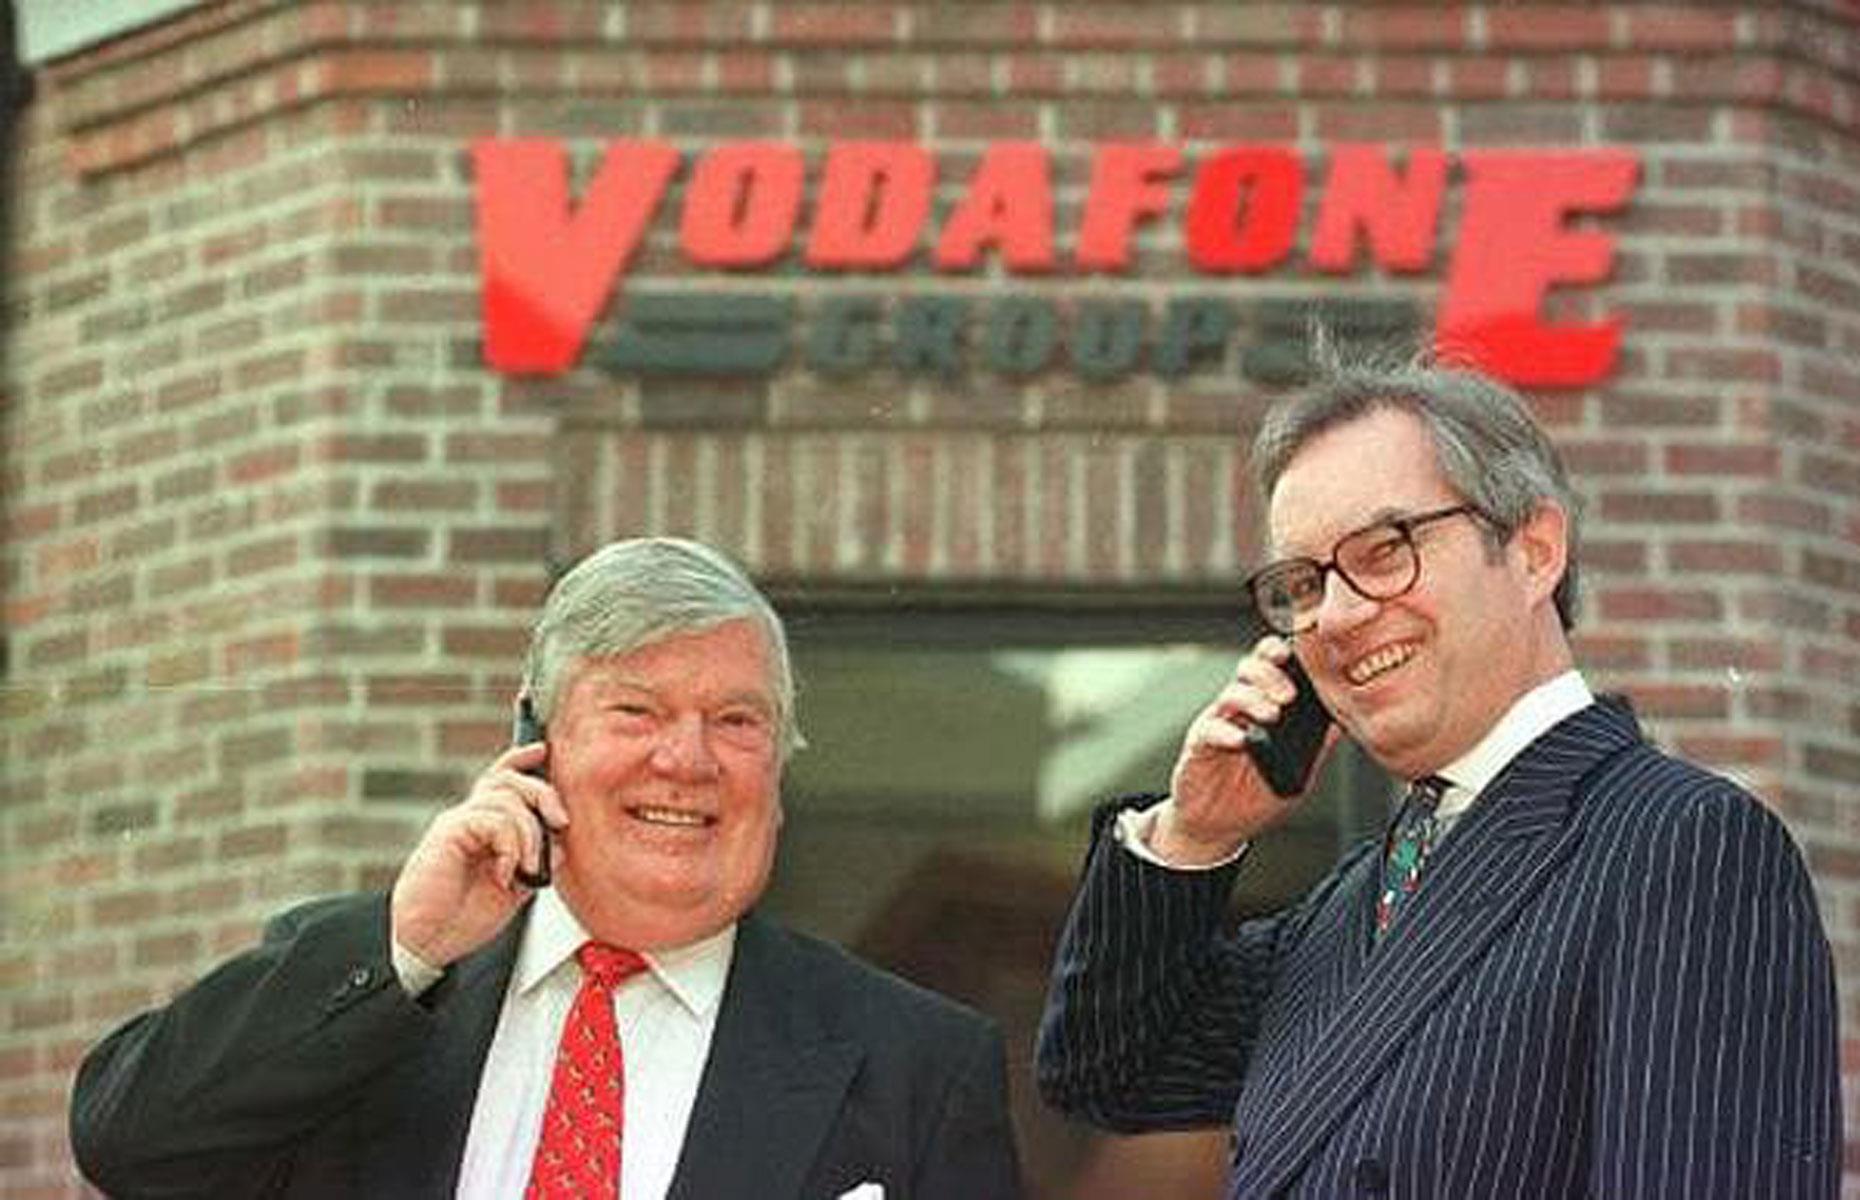 1991: Vodafone